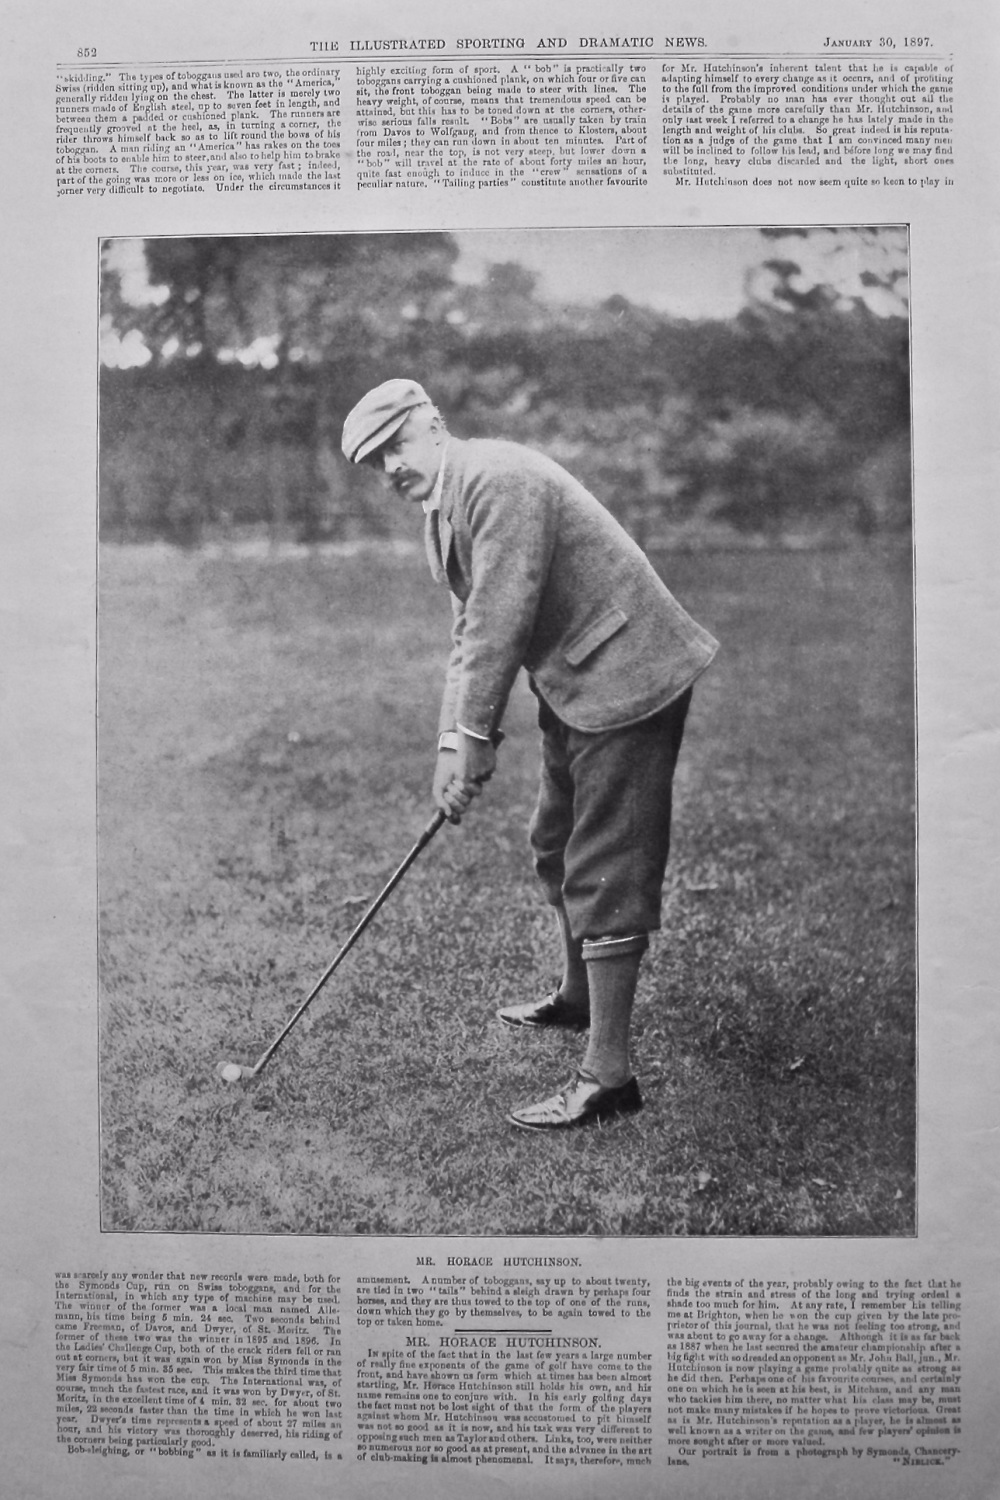 Mr. Horace Hutchinson. (Golfer) 1897.